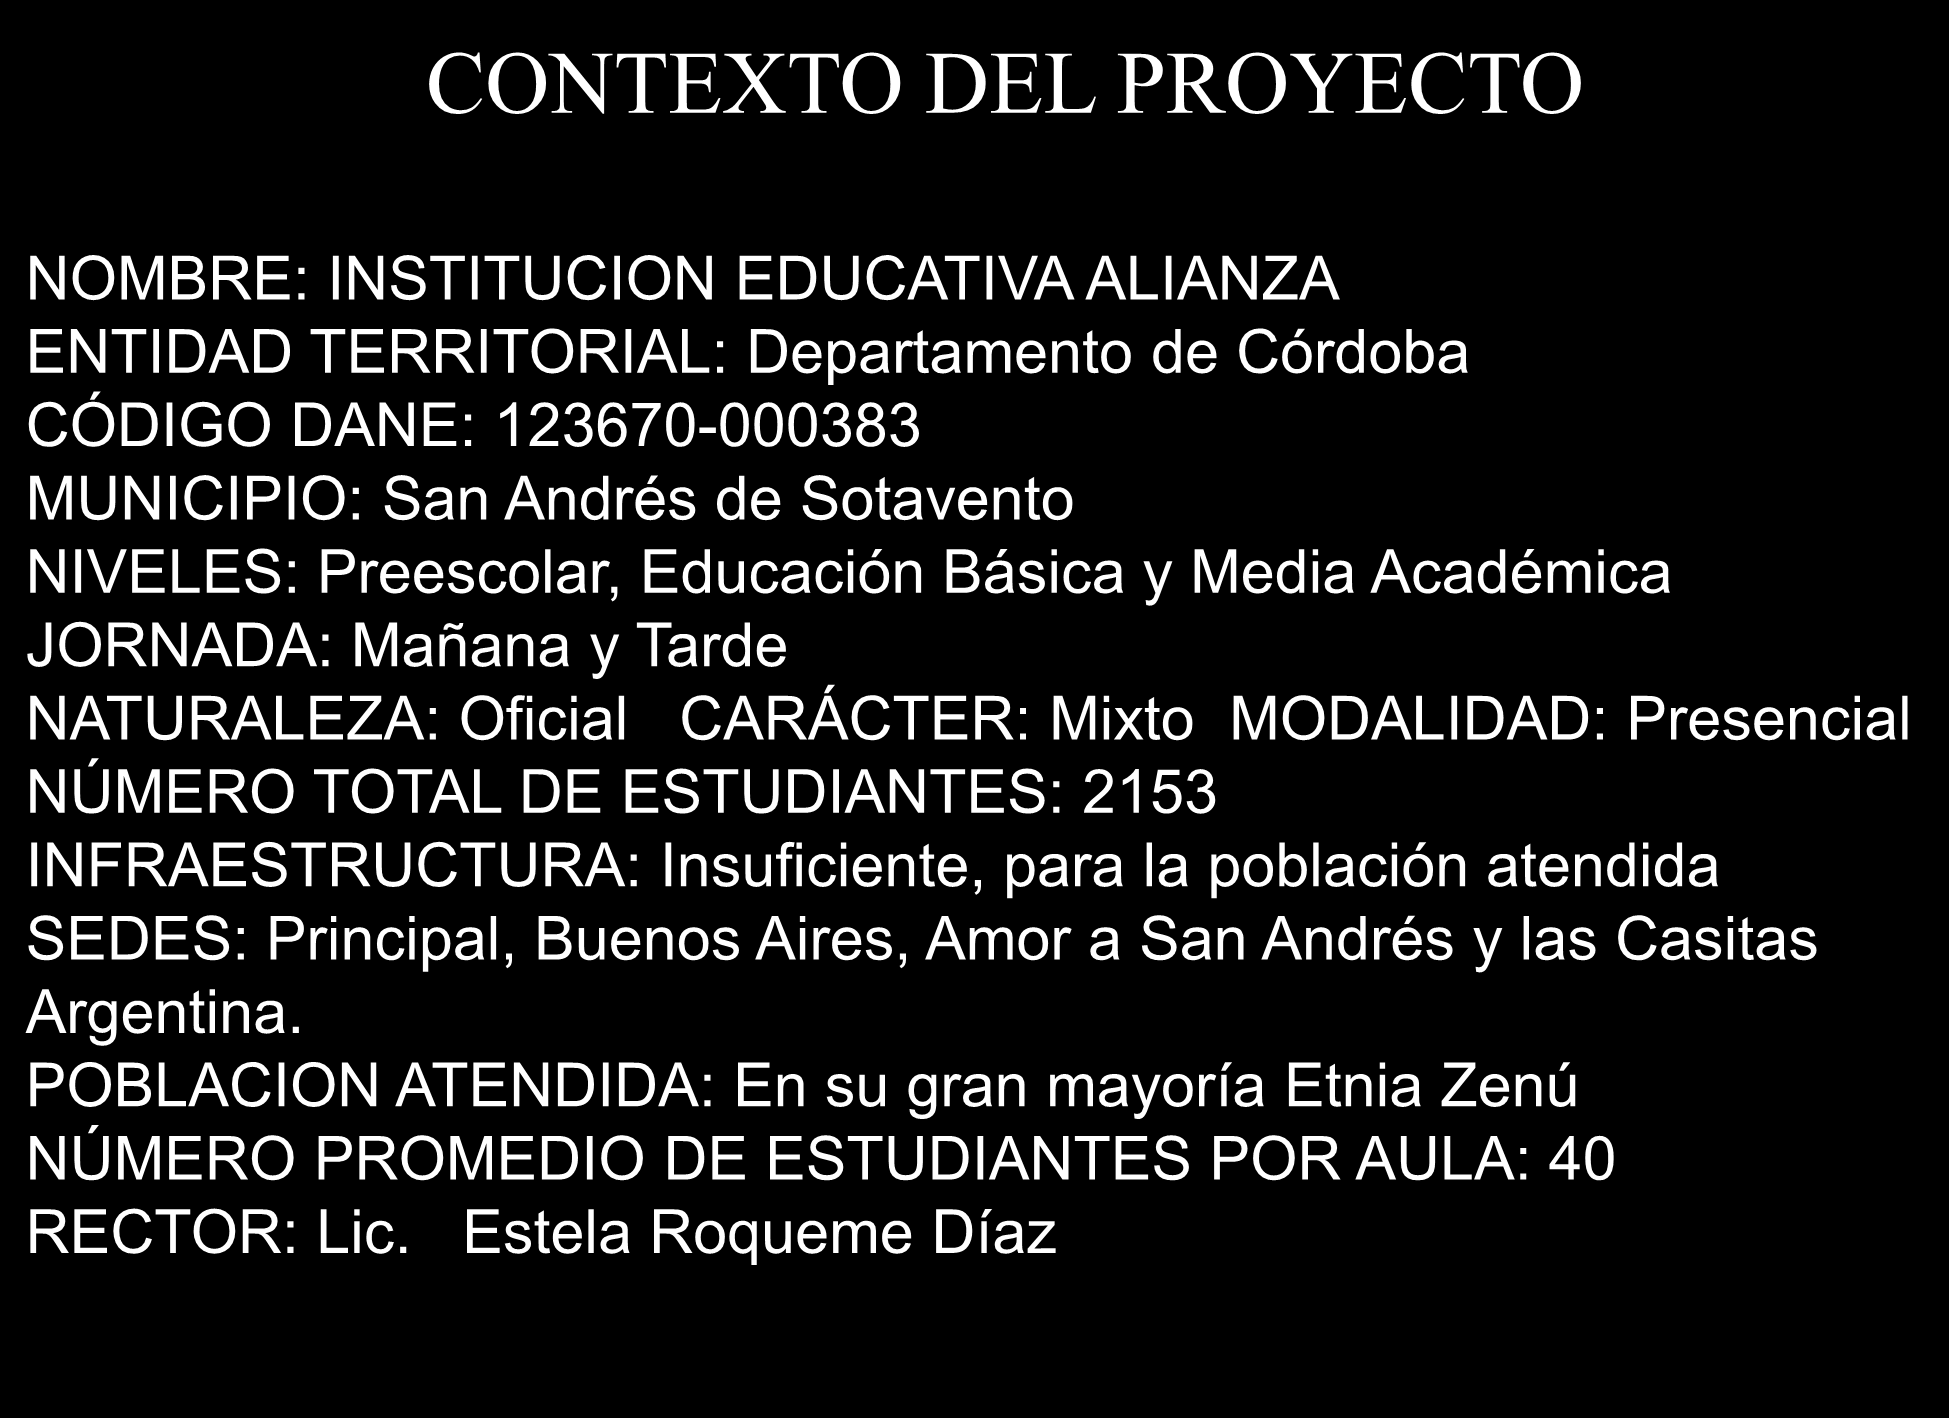 CONTEXTO DEL PROYECTO NOMBRE: INSTITUCION EDUCATIVA ALIANZA ENTIDAD TERRITORIAL: Departamento de Córdoba CÓDIGO DANE: 123670-000383 MUNICIPIO: San Andrés de Sotavento NIVELES: Preescolar, Educación